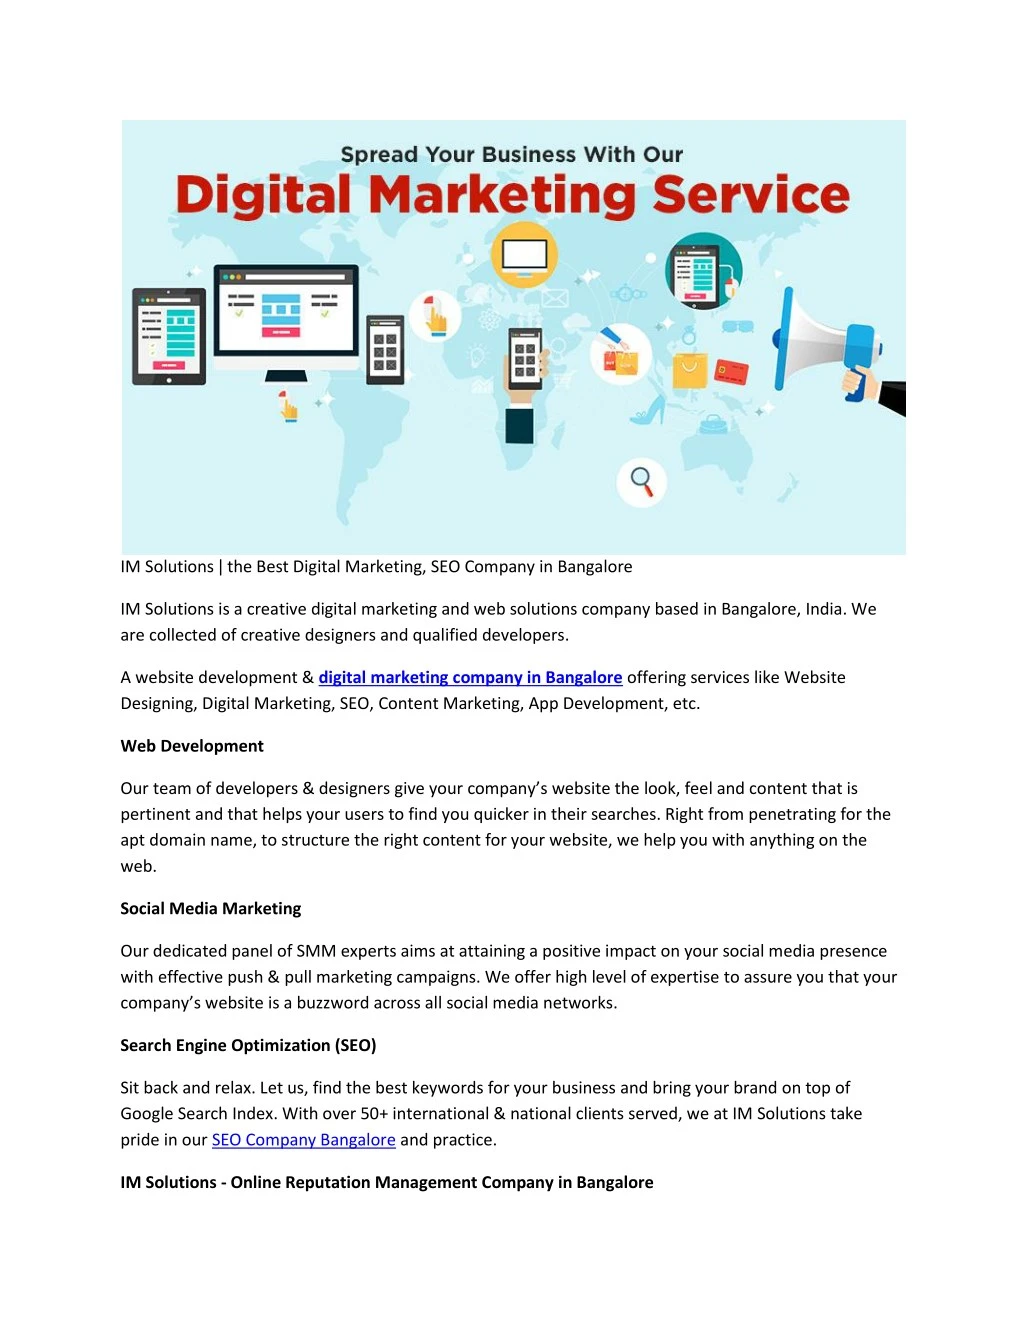 im solutions the best digital marketing